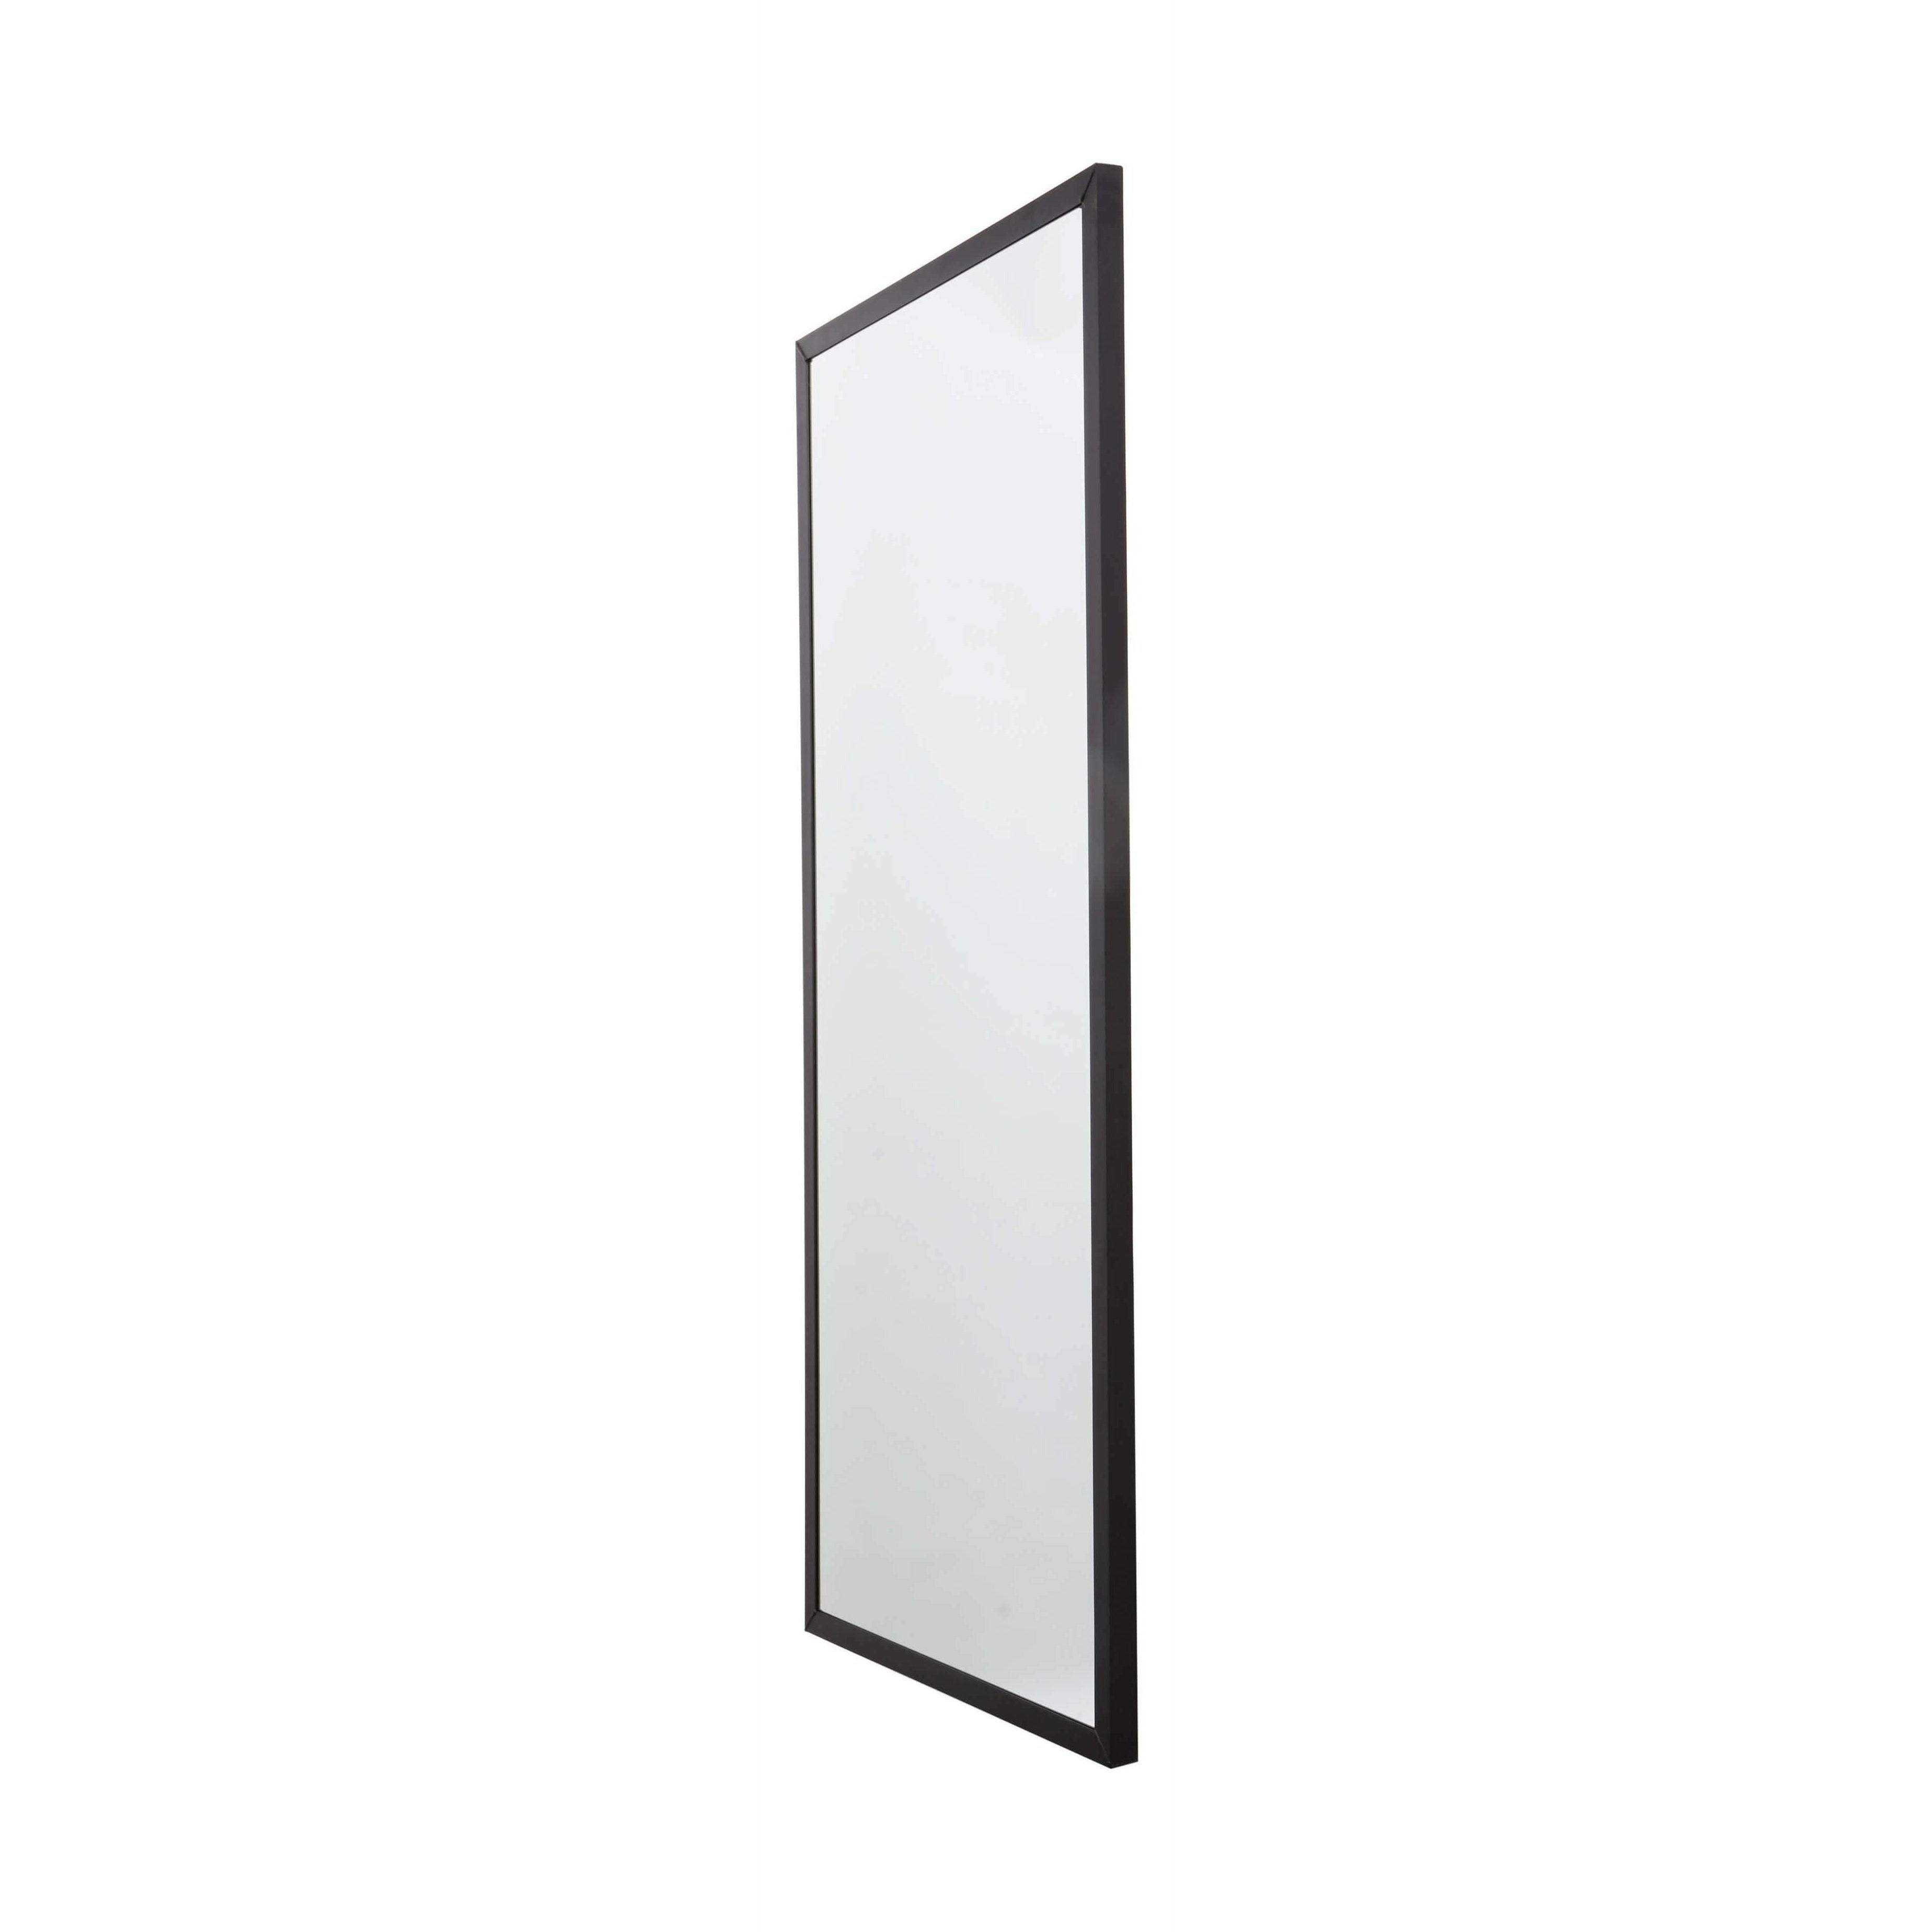 Muubs Washington Wall Specchio nero, 120 cm